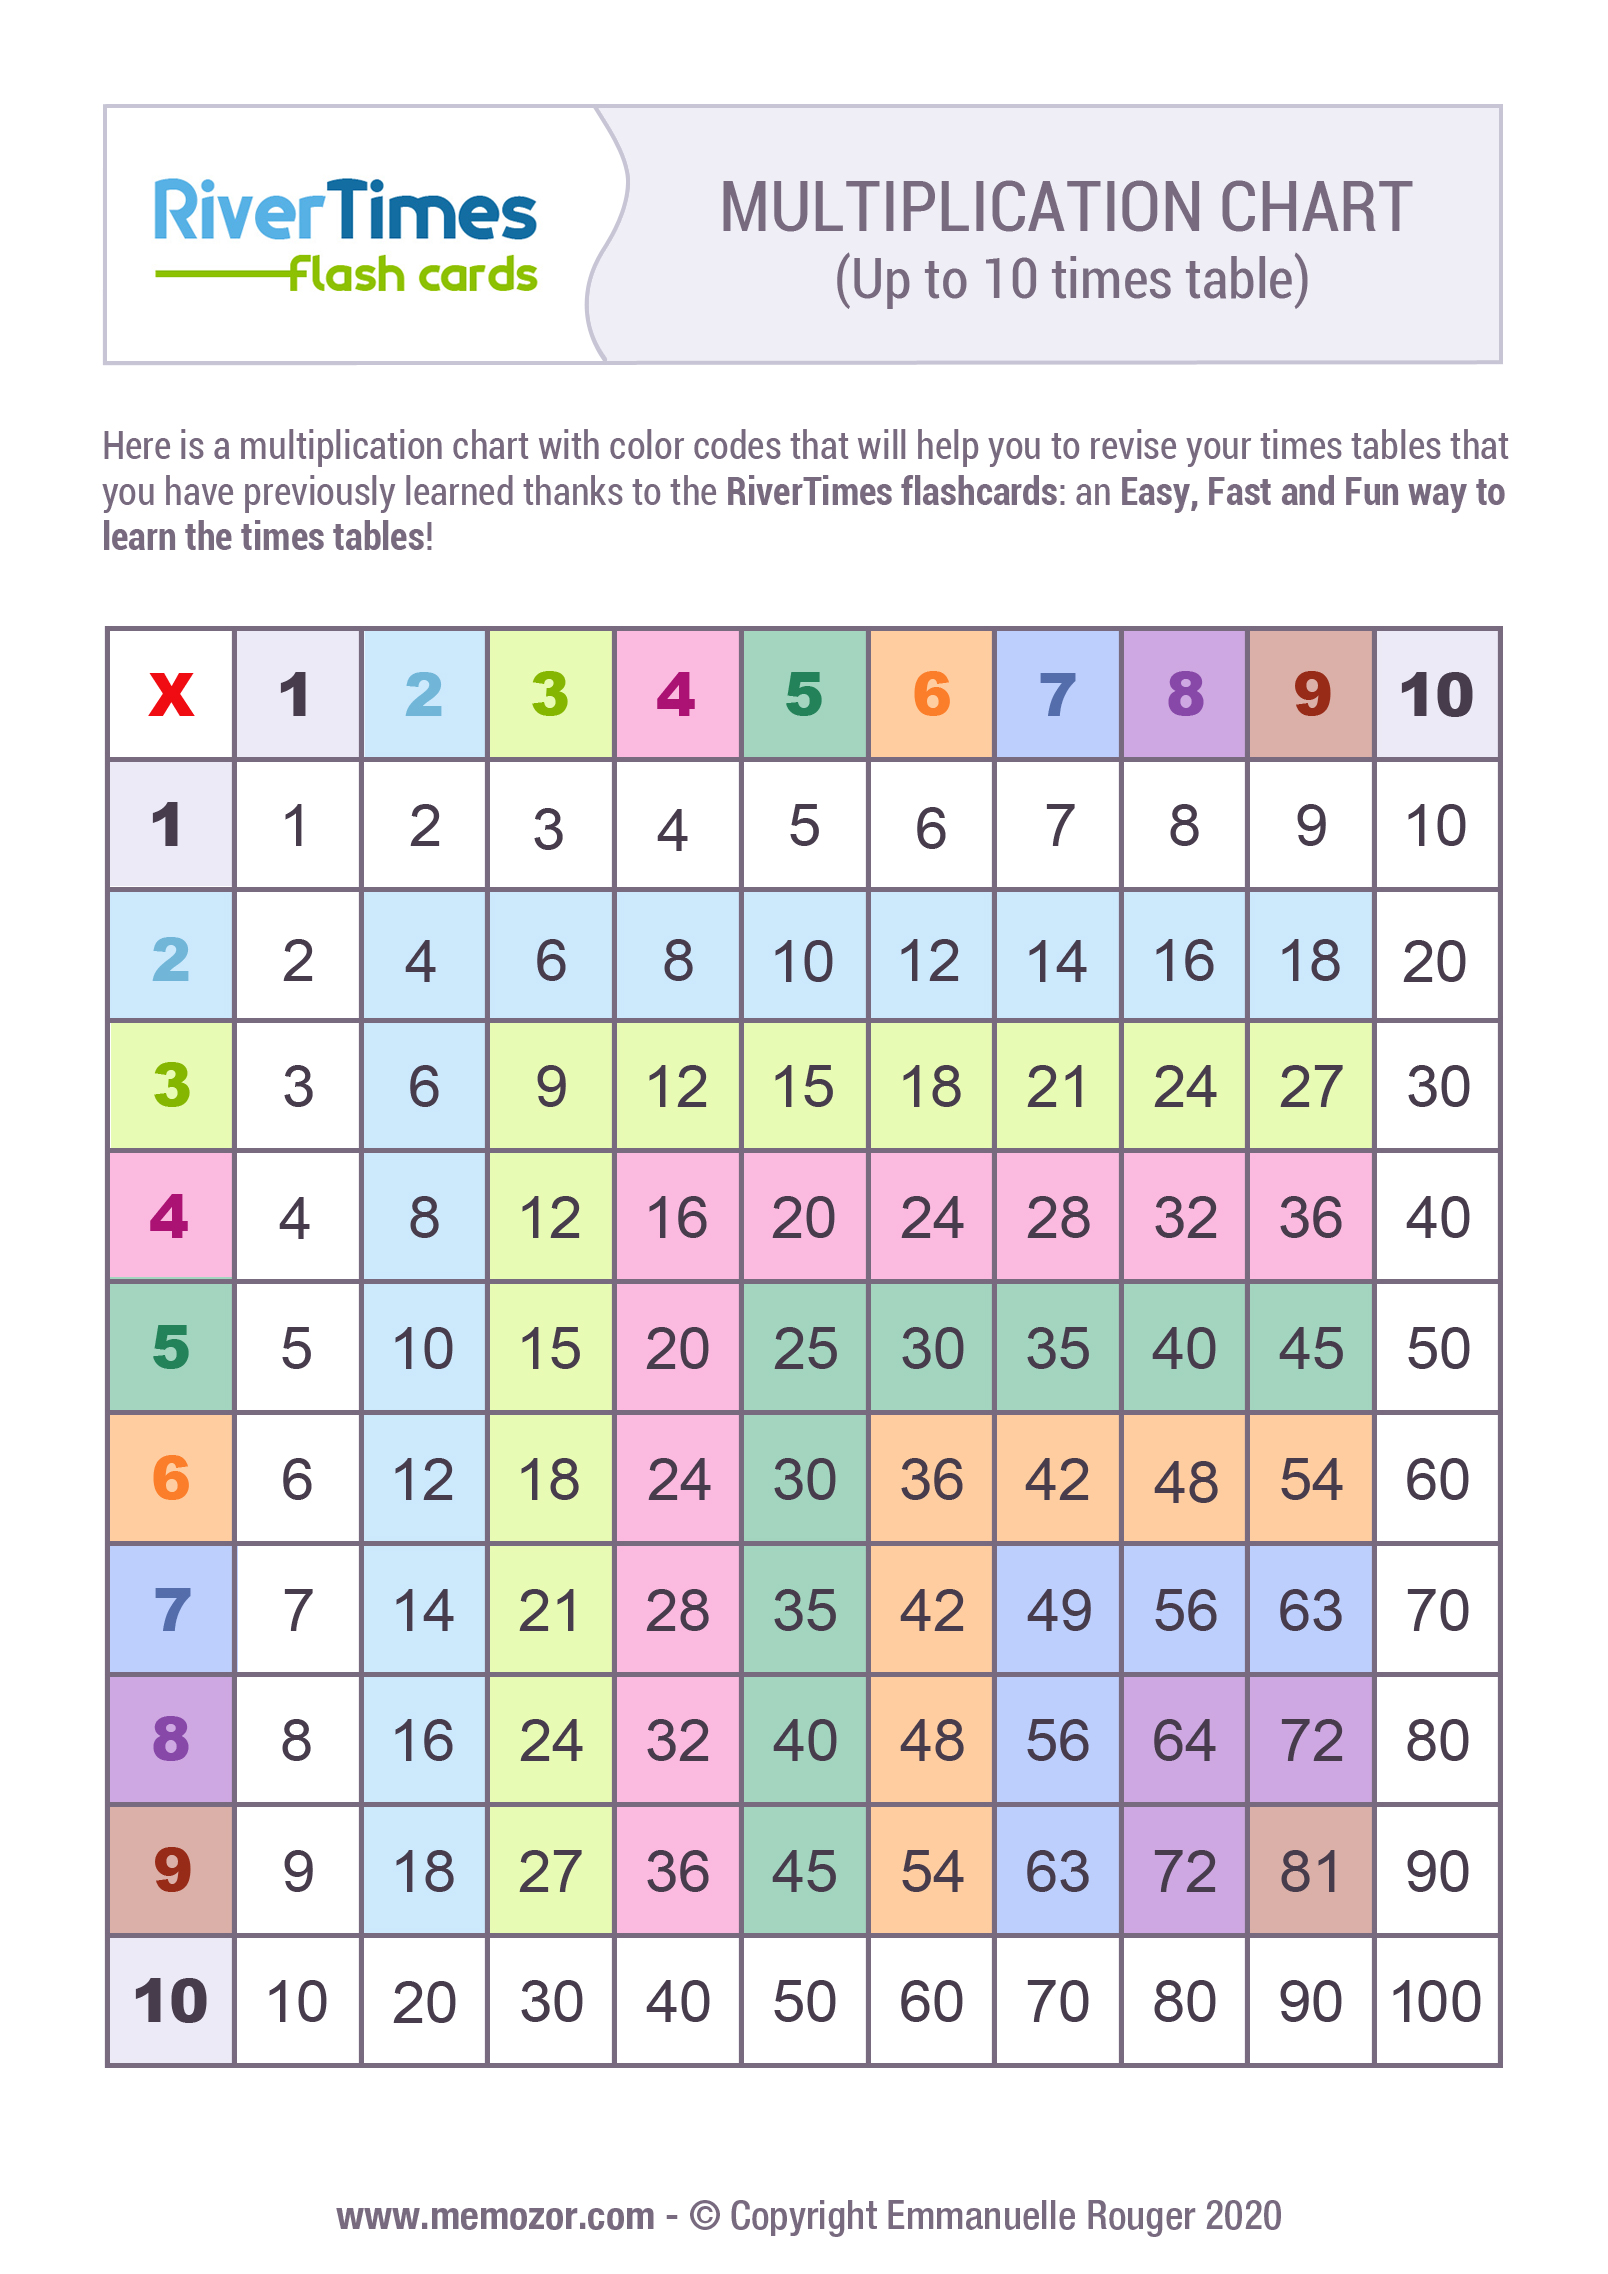 multiplication-chart-printable-1-10-customize-and-print